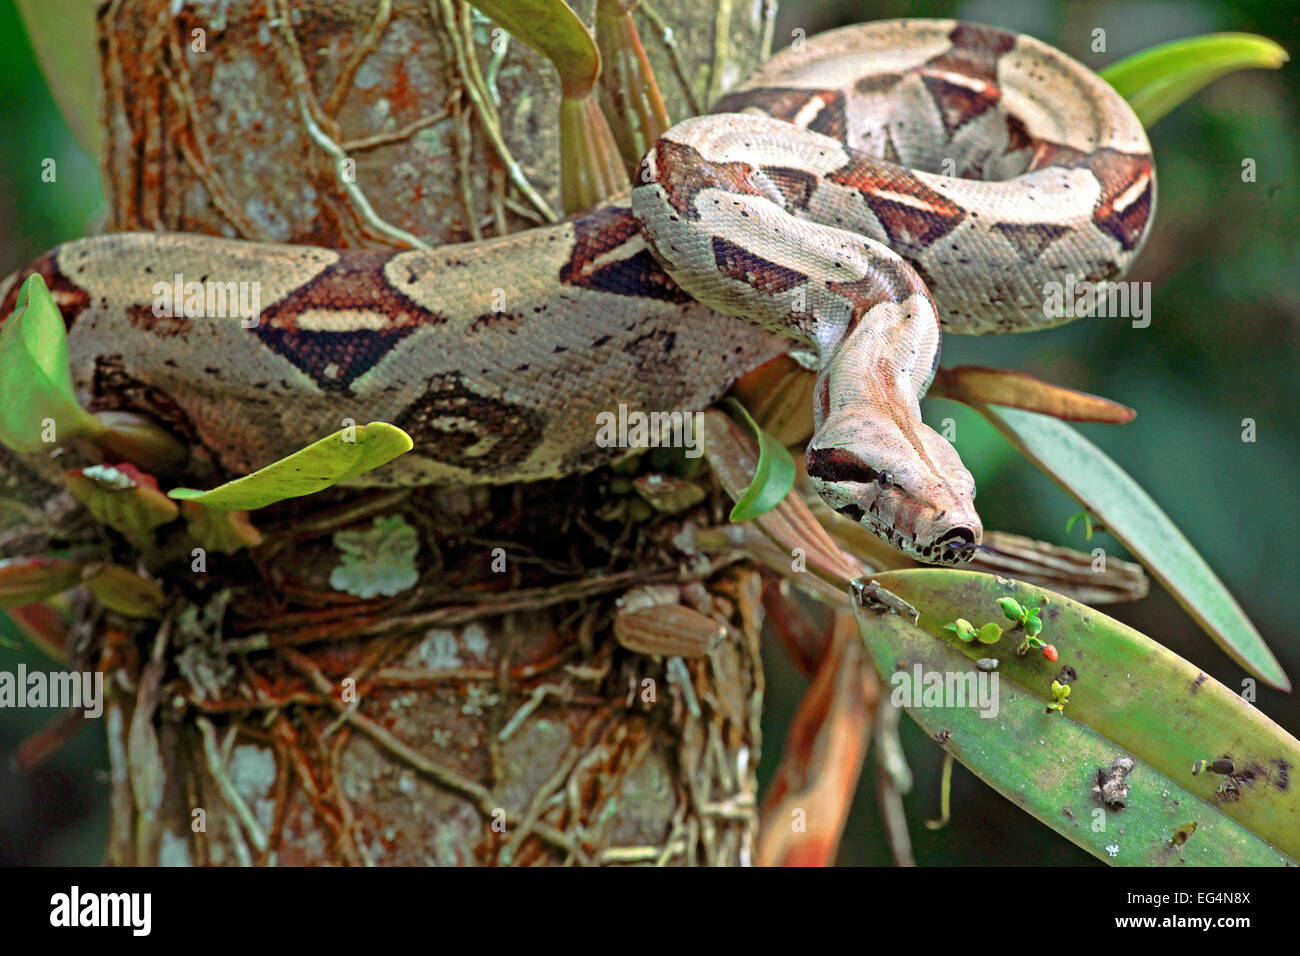 Abgottschlangen (Boa Constrictor) Stockfoto